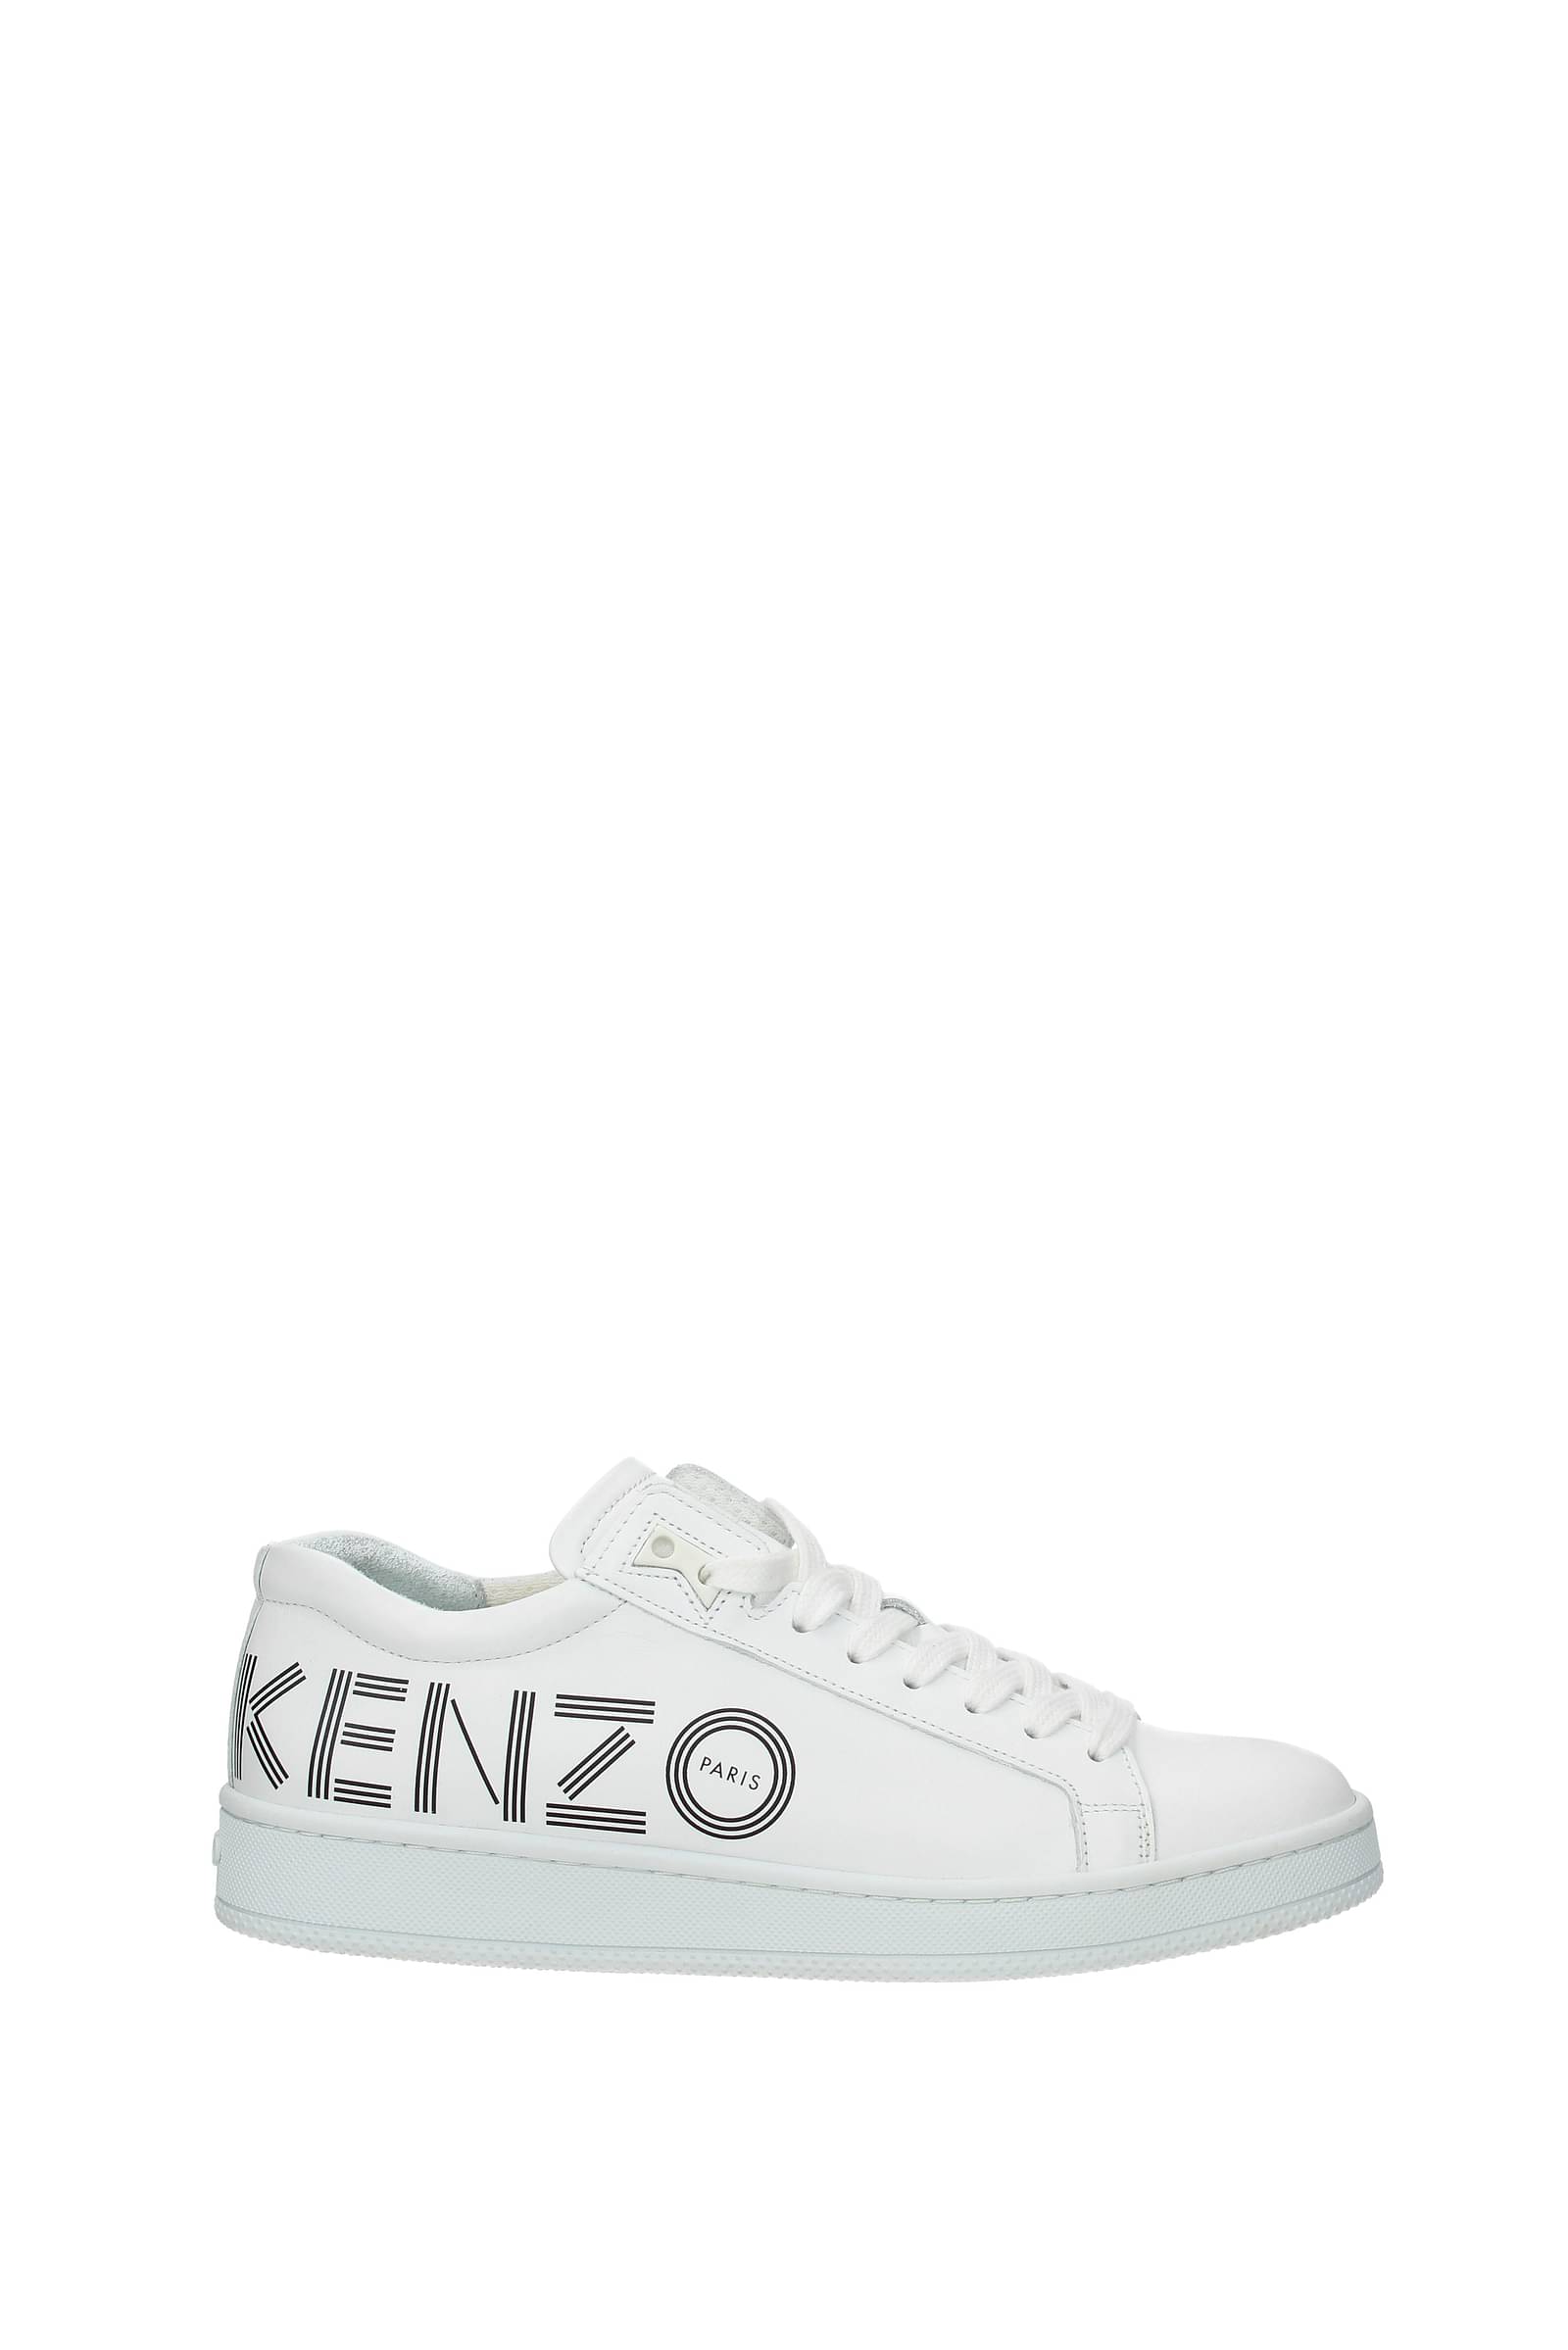 kenzo mens sneakers